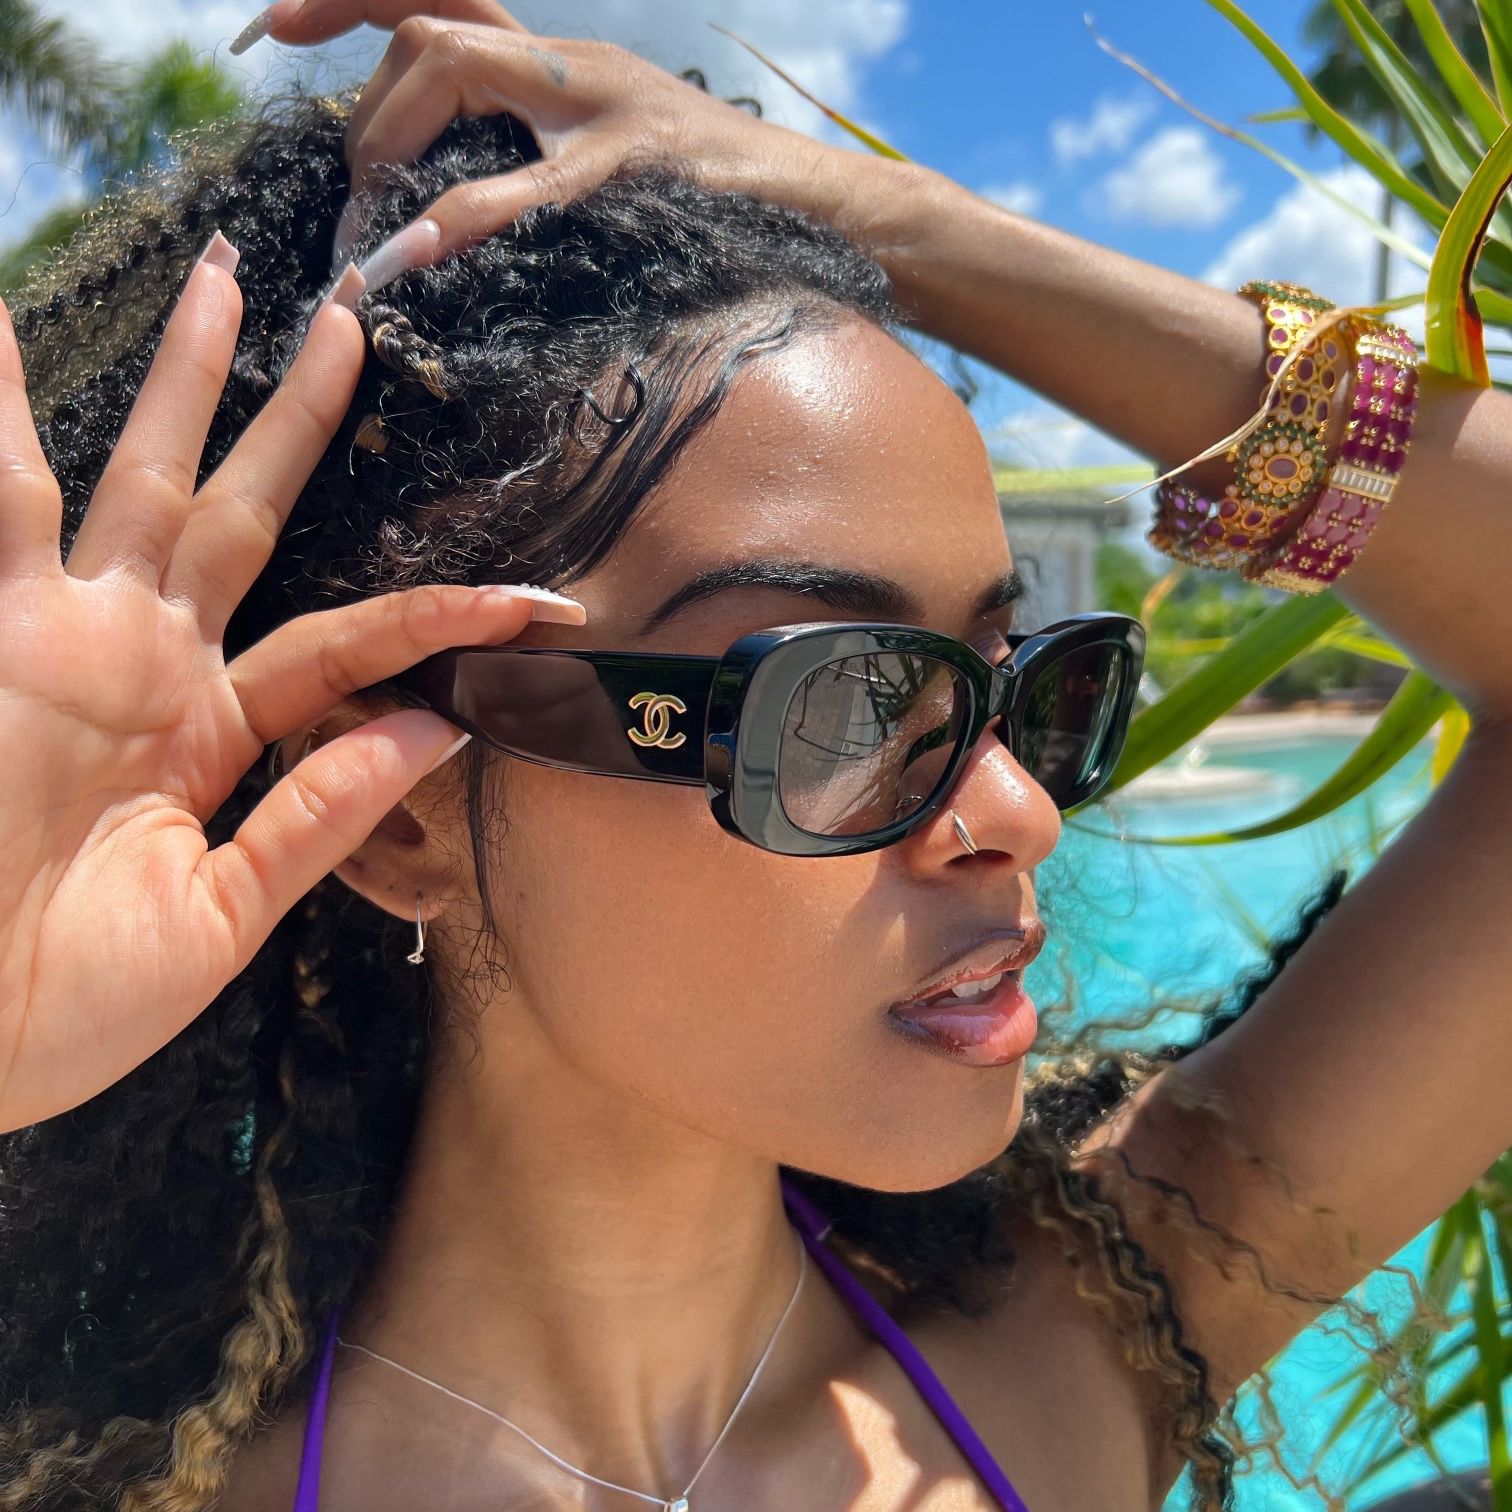 Chanel sun glasses for women for Sale in Sanford, FL - OfferUp